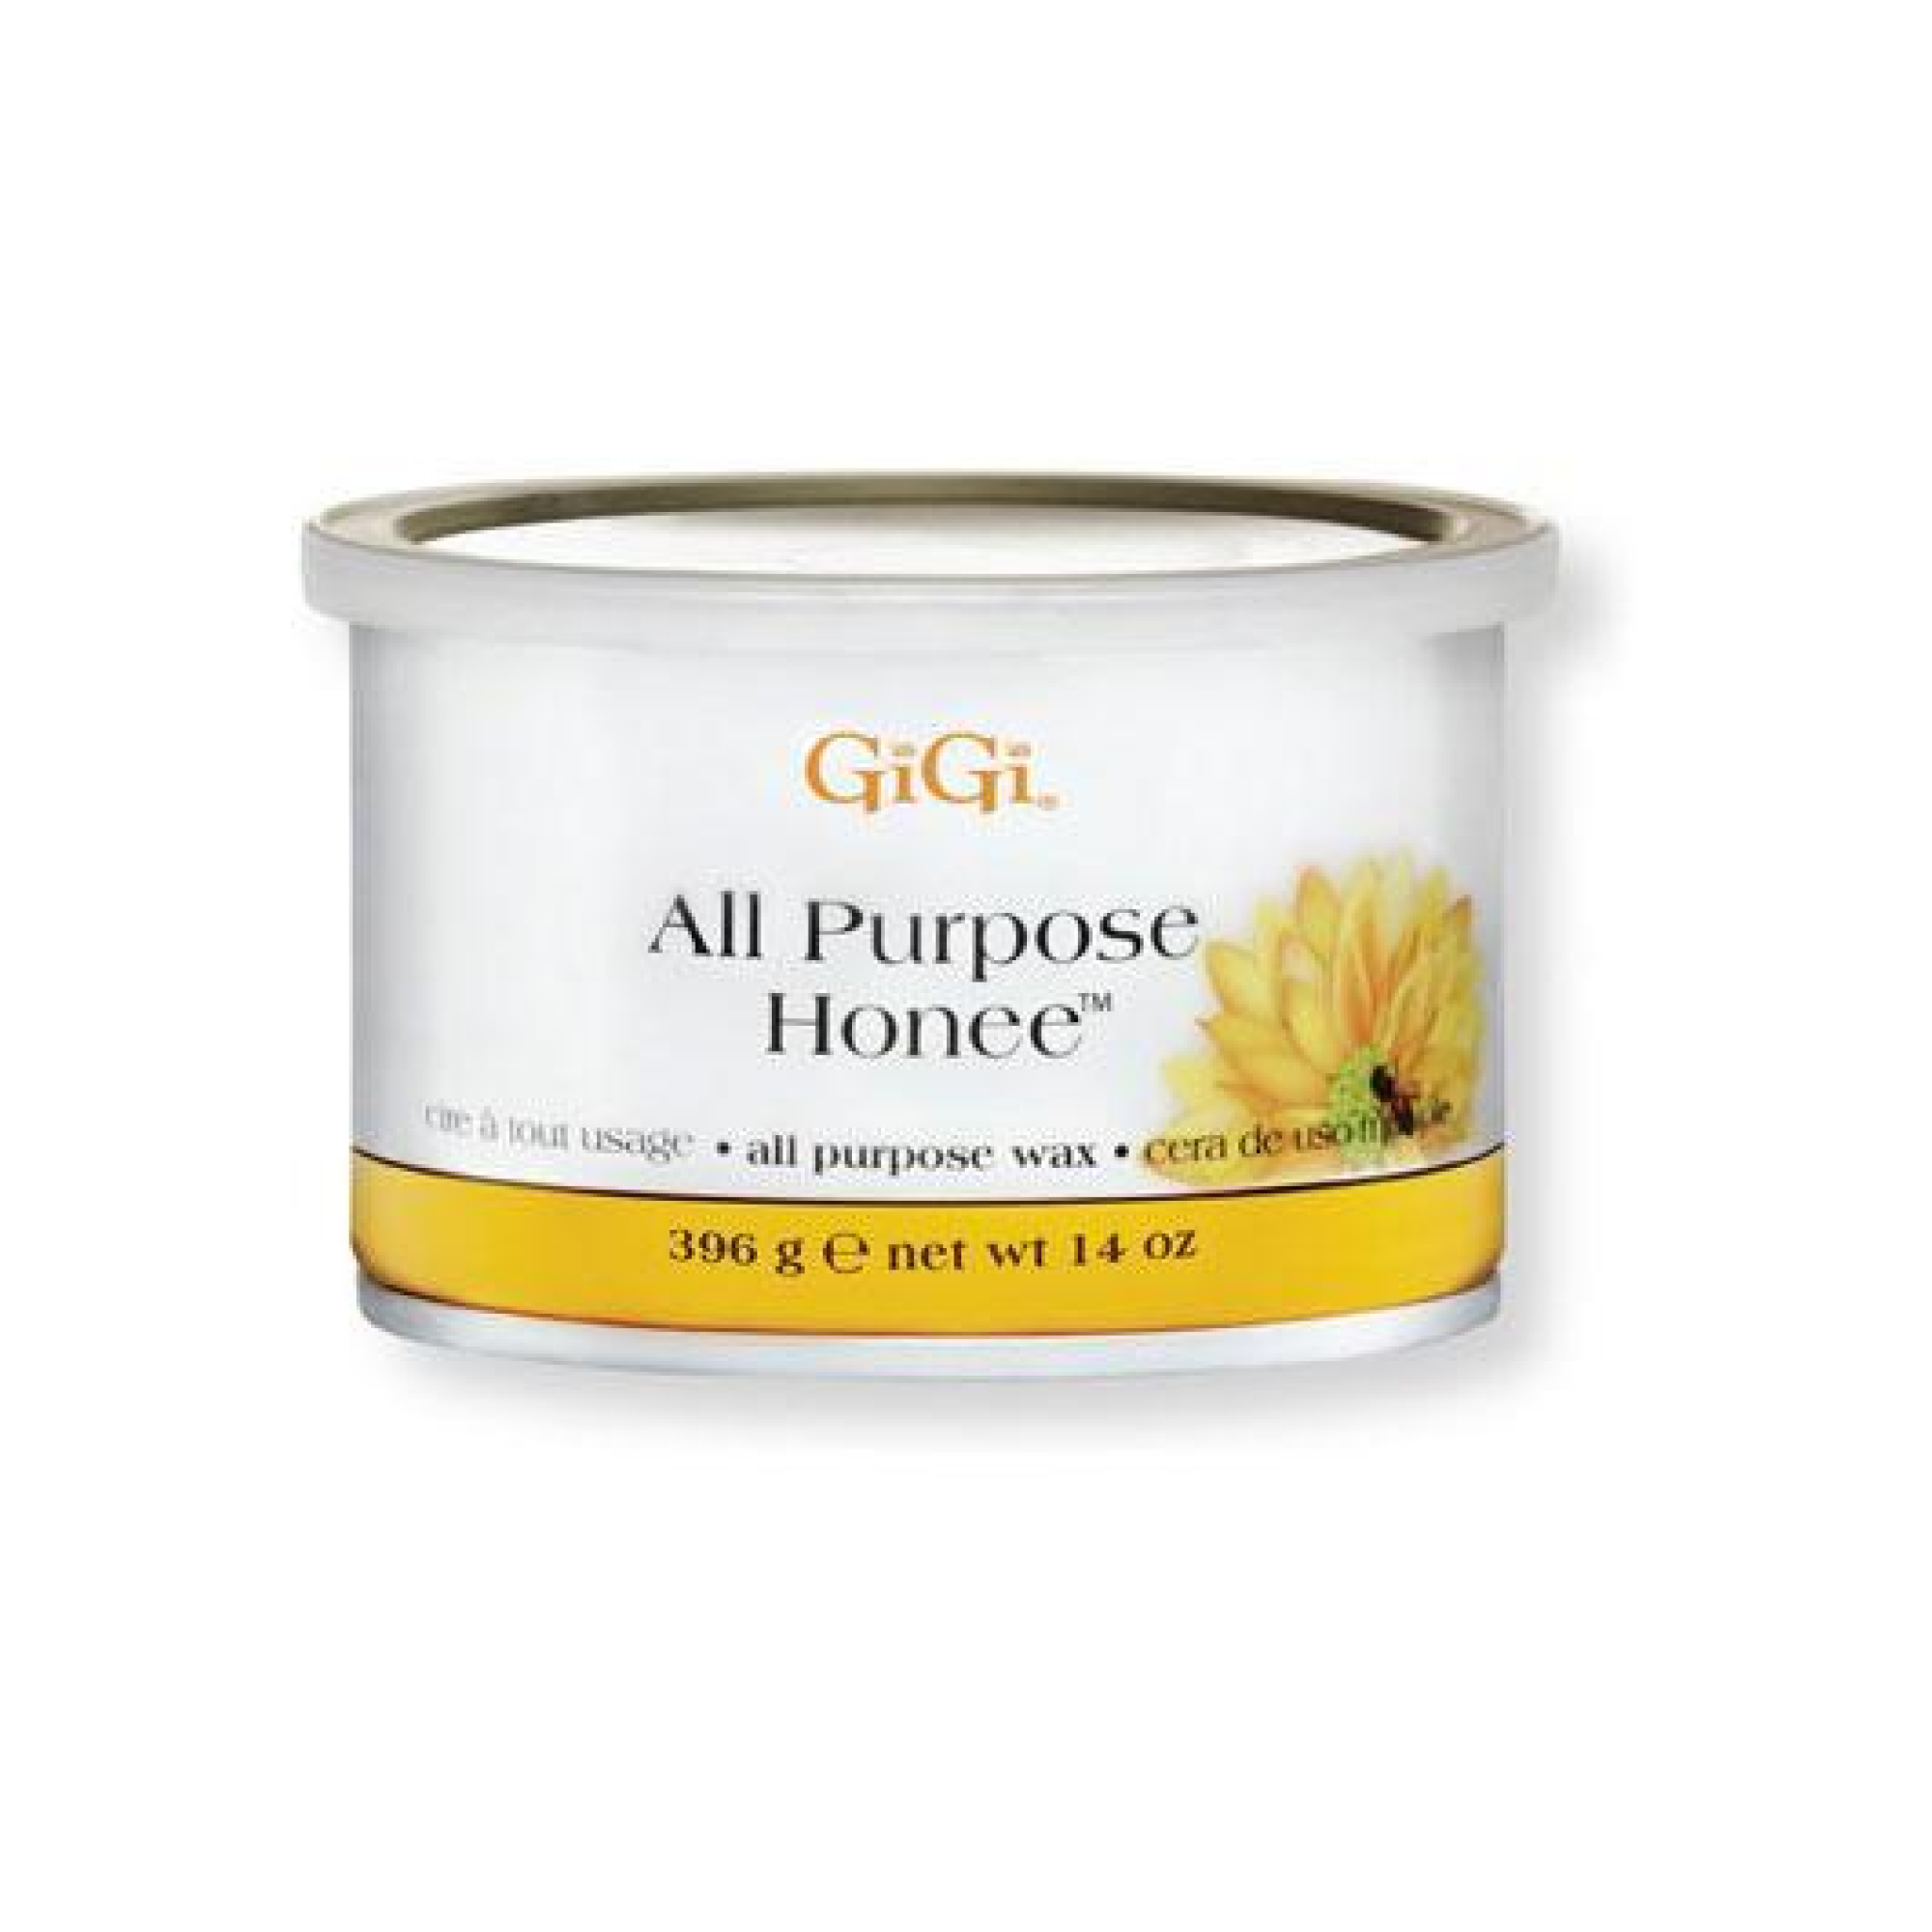 All Purpose Honee all purpose wax item # 0330